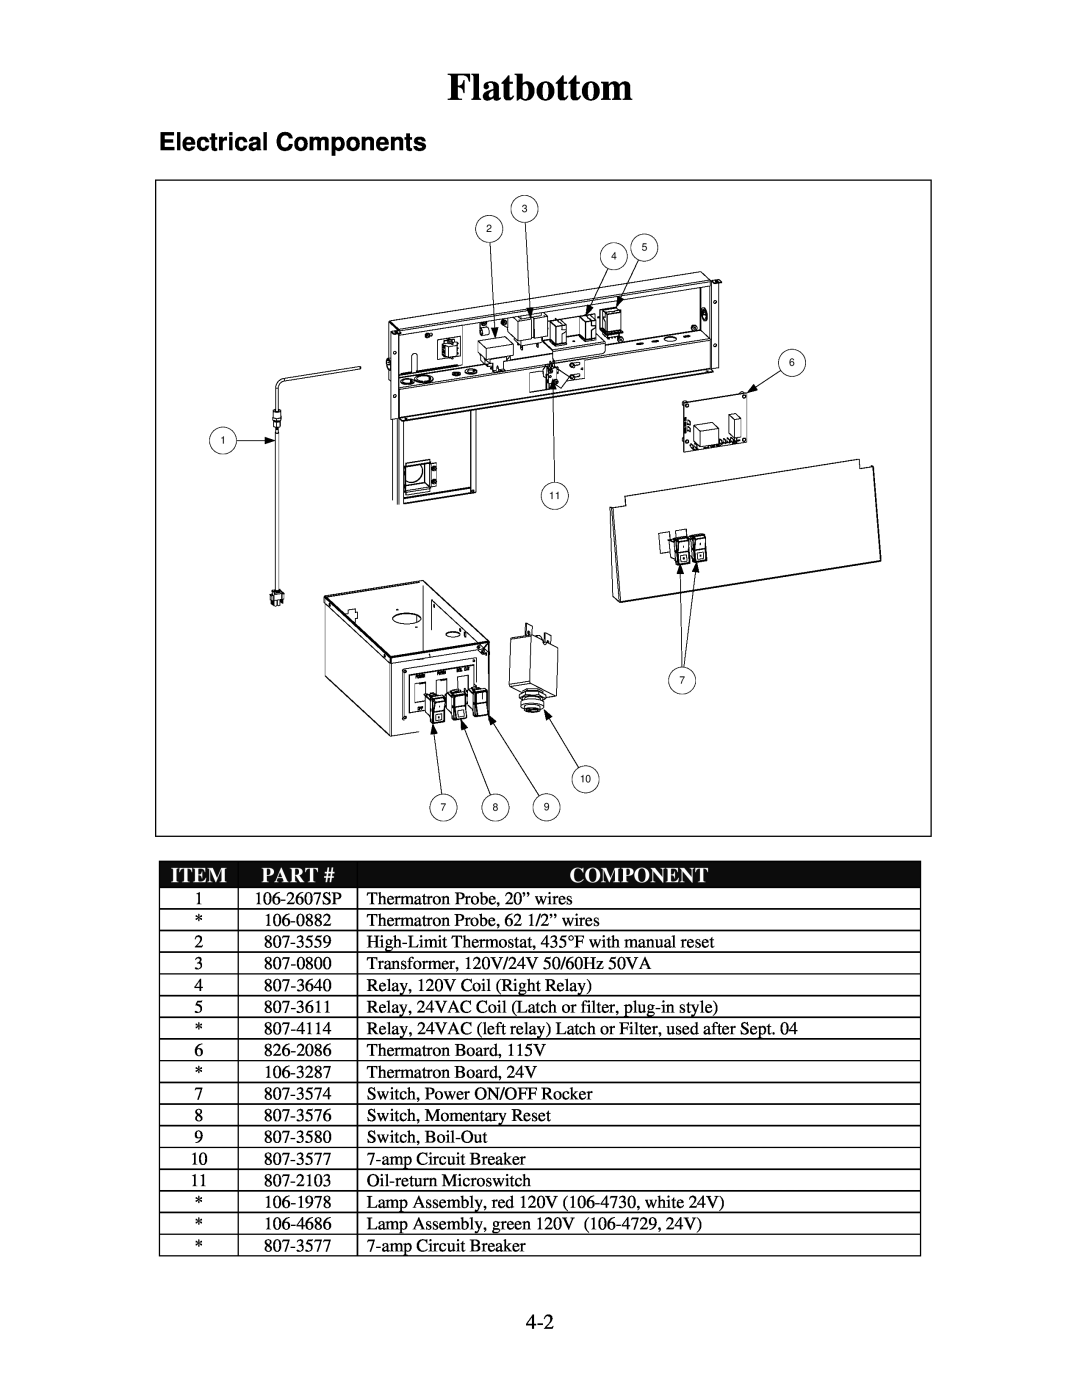 Frymaster 8196321 manual Electrical Components, Part #, Flatbottom 